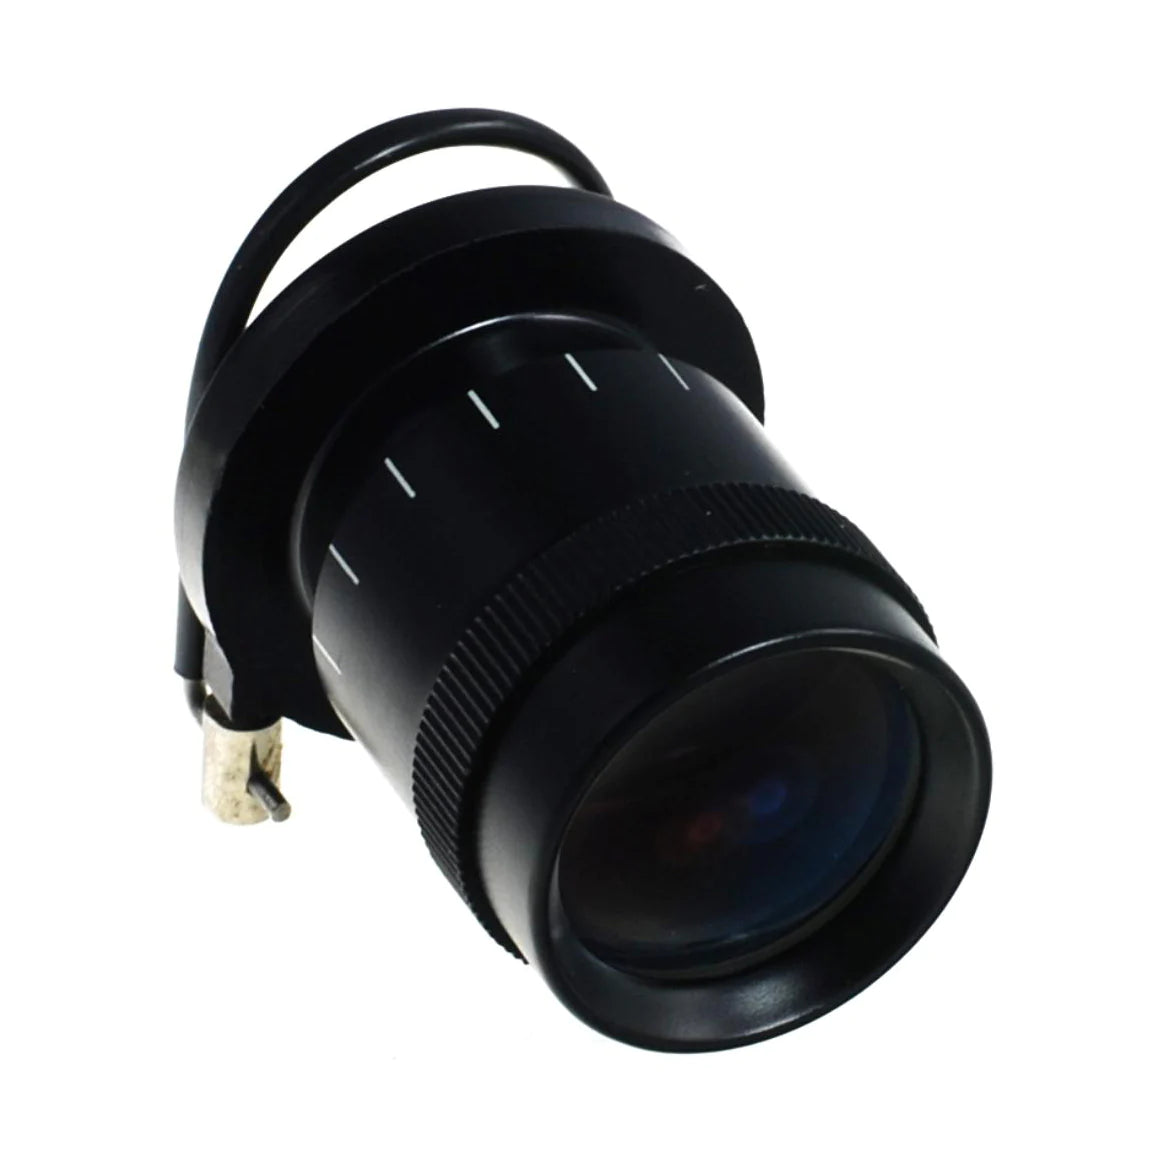 A black telescopic device that looks like a binocular lens